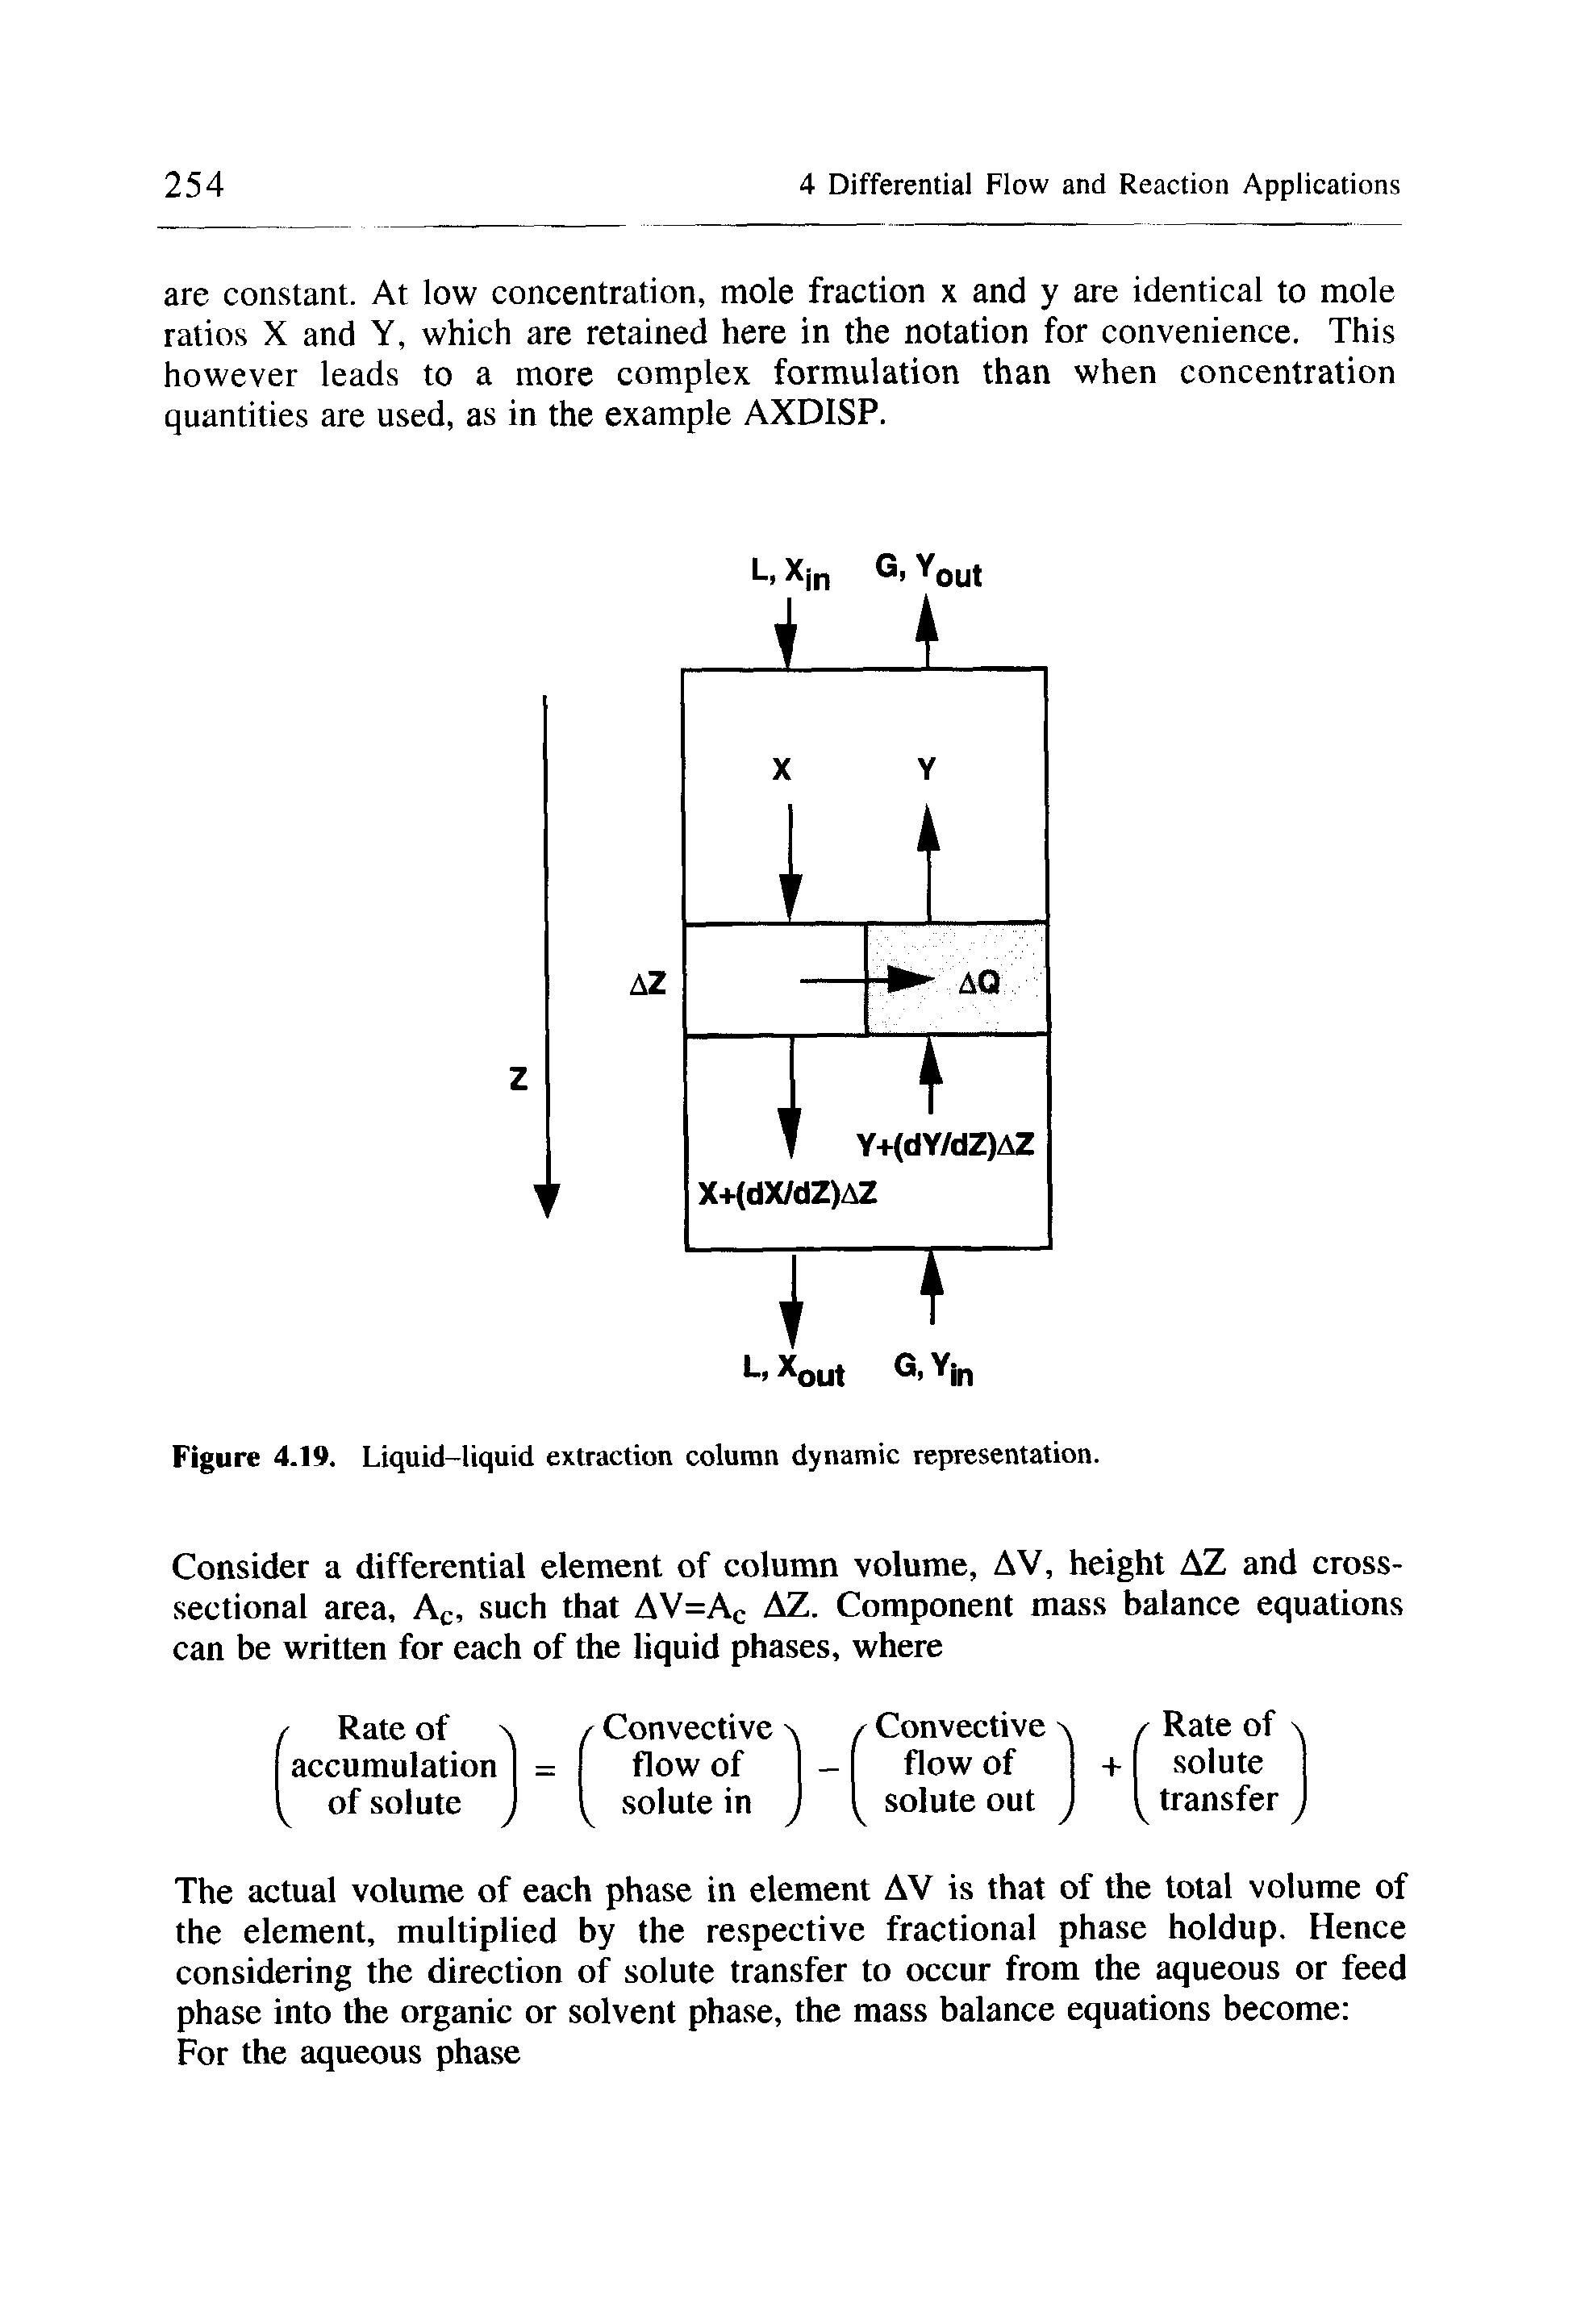 Figure 4.19. Liquid-liquid extraction column dynamic representation.